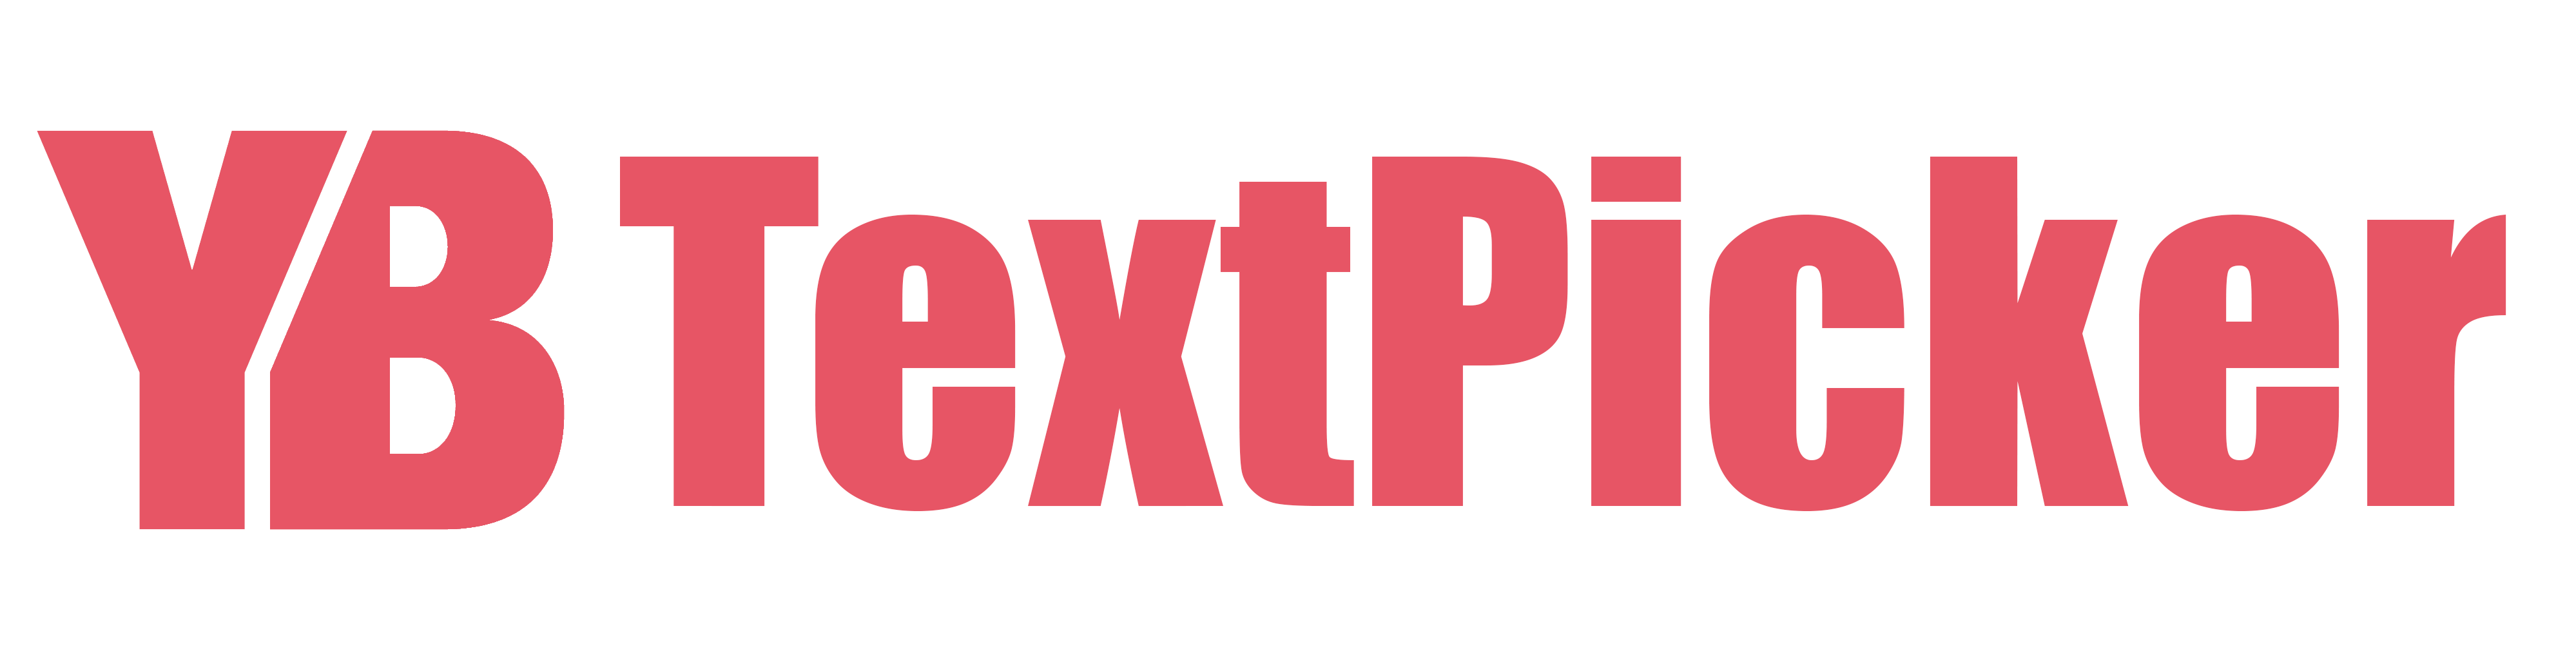 YBTextPicker_Logo.png